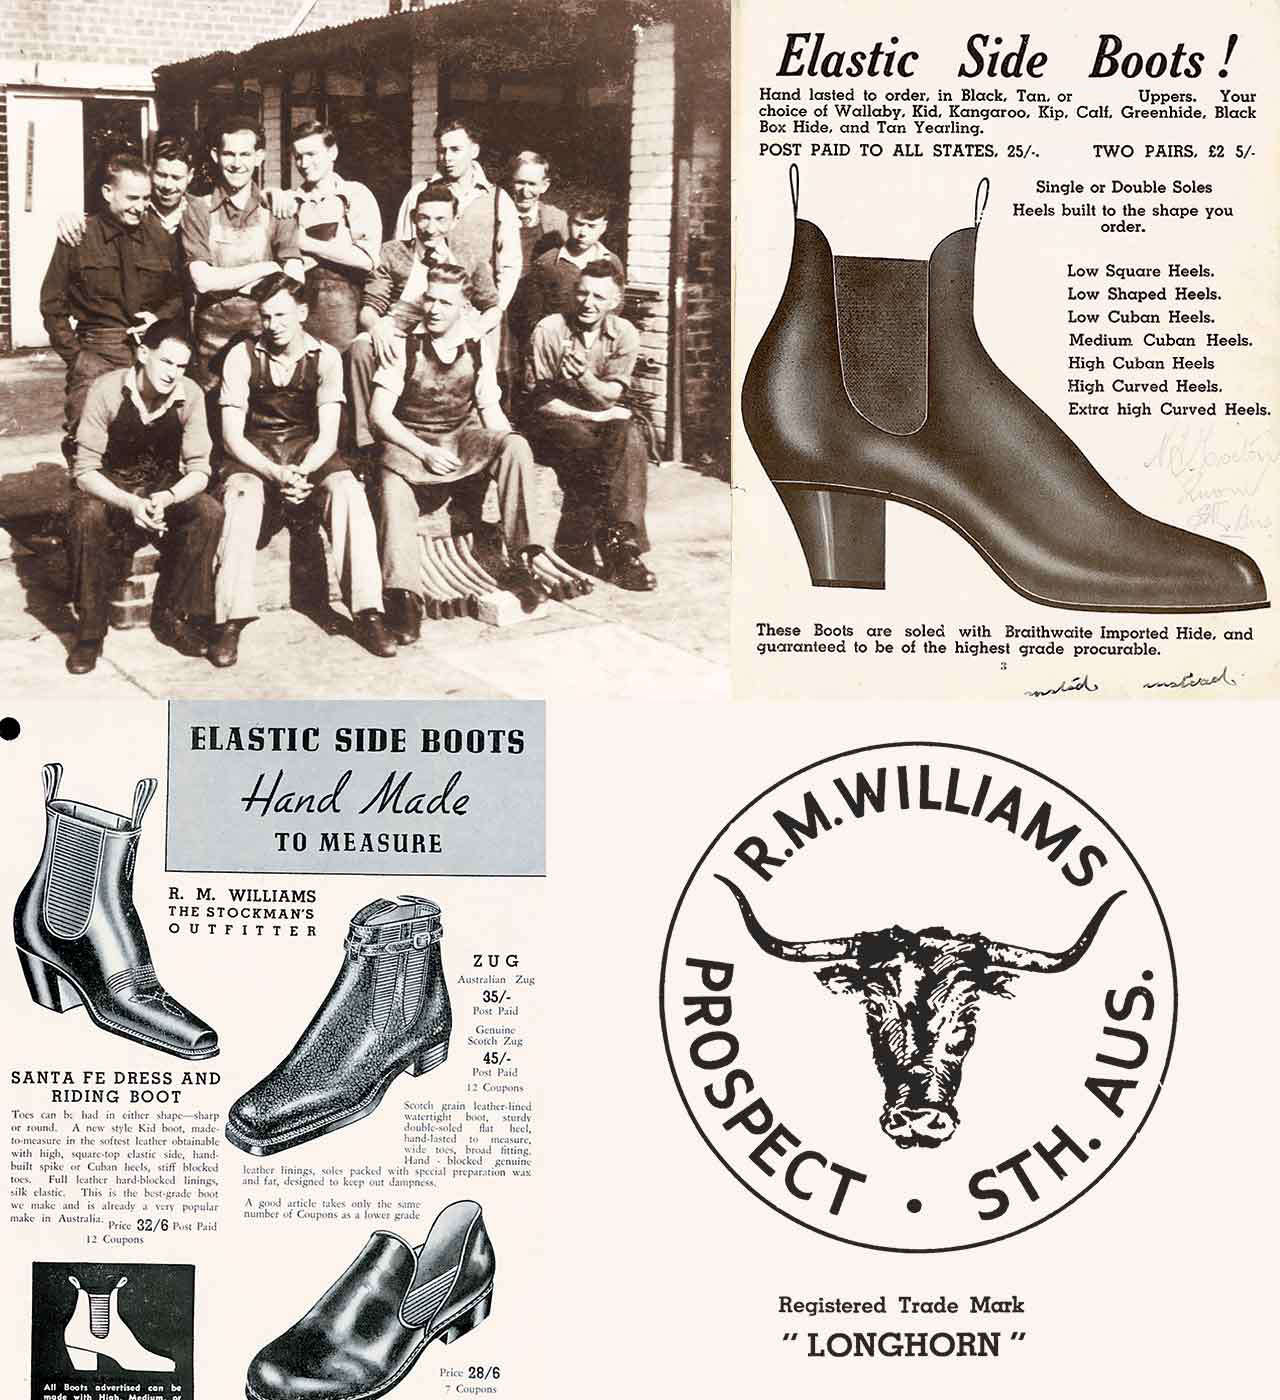 rm williams longhorn boots